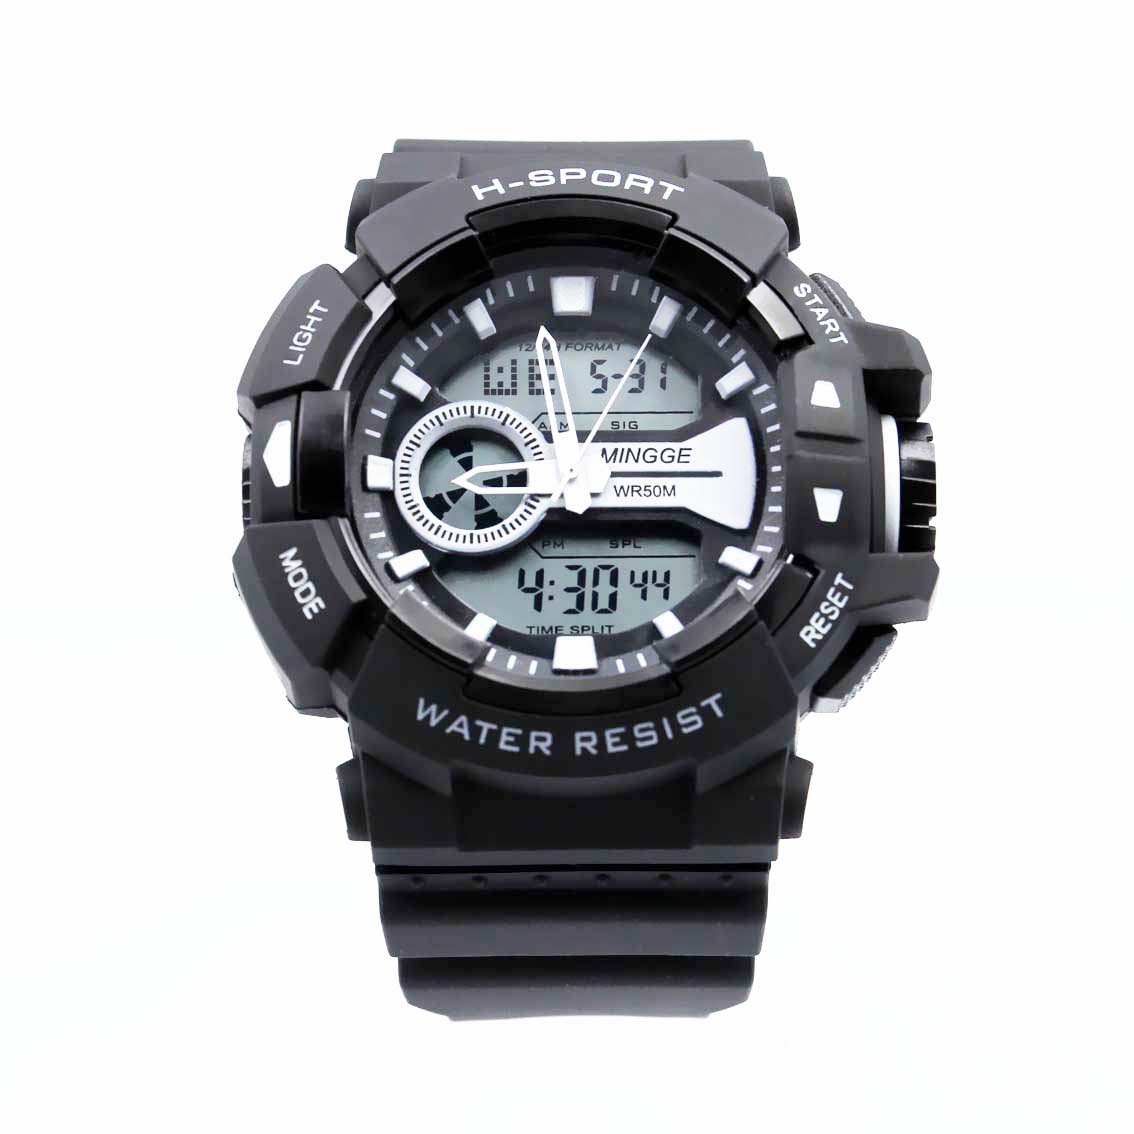 #02057Men's wristwatch quartz analog silicone strap watch